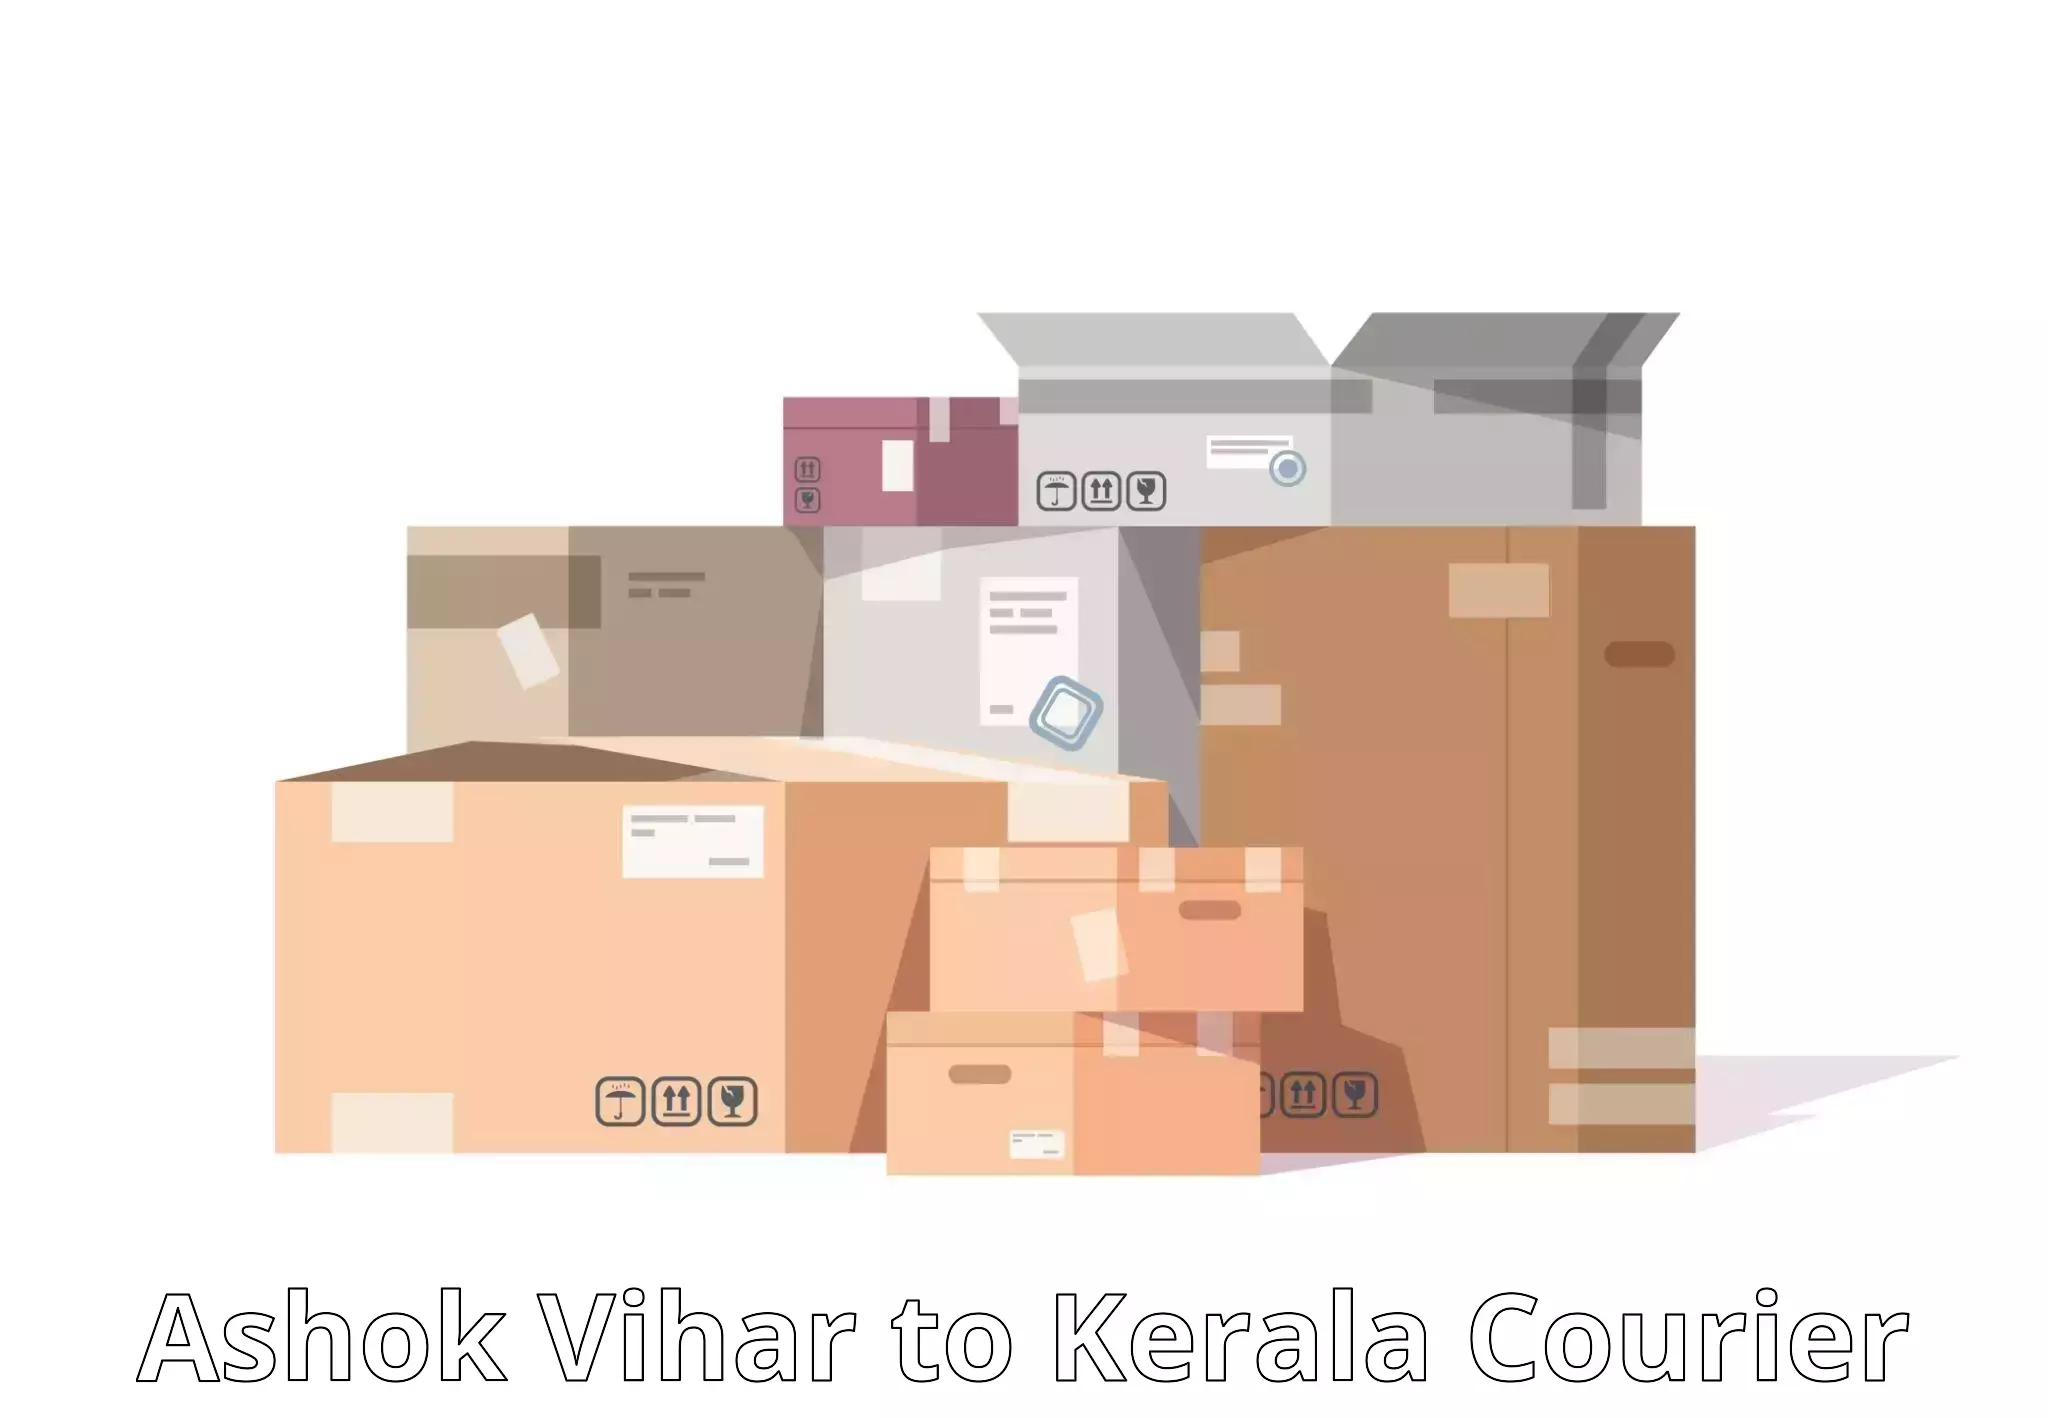 Digital courier platforms Ashok Vihar to Kazhakkoottam